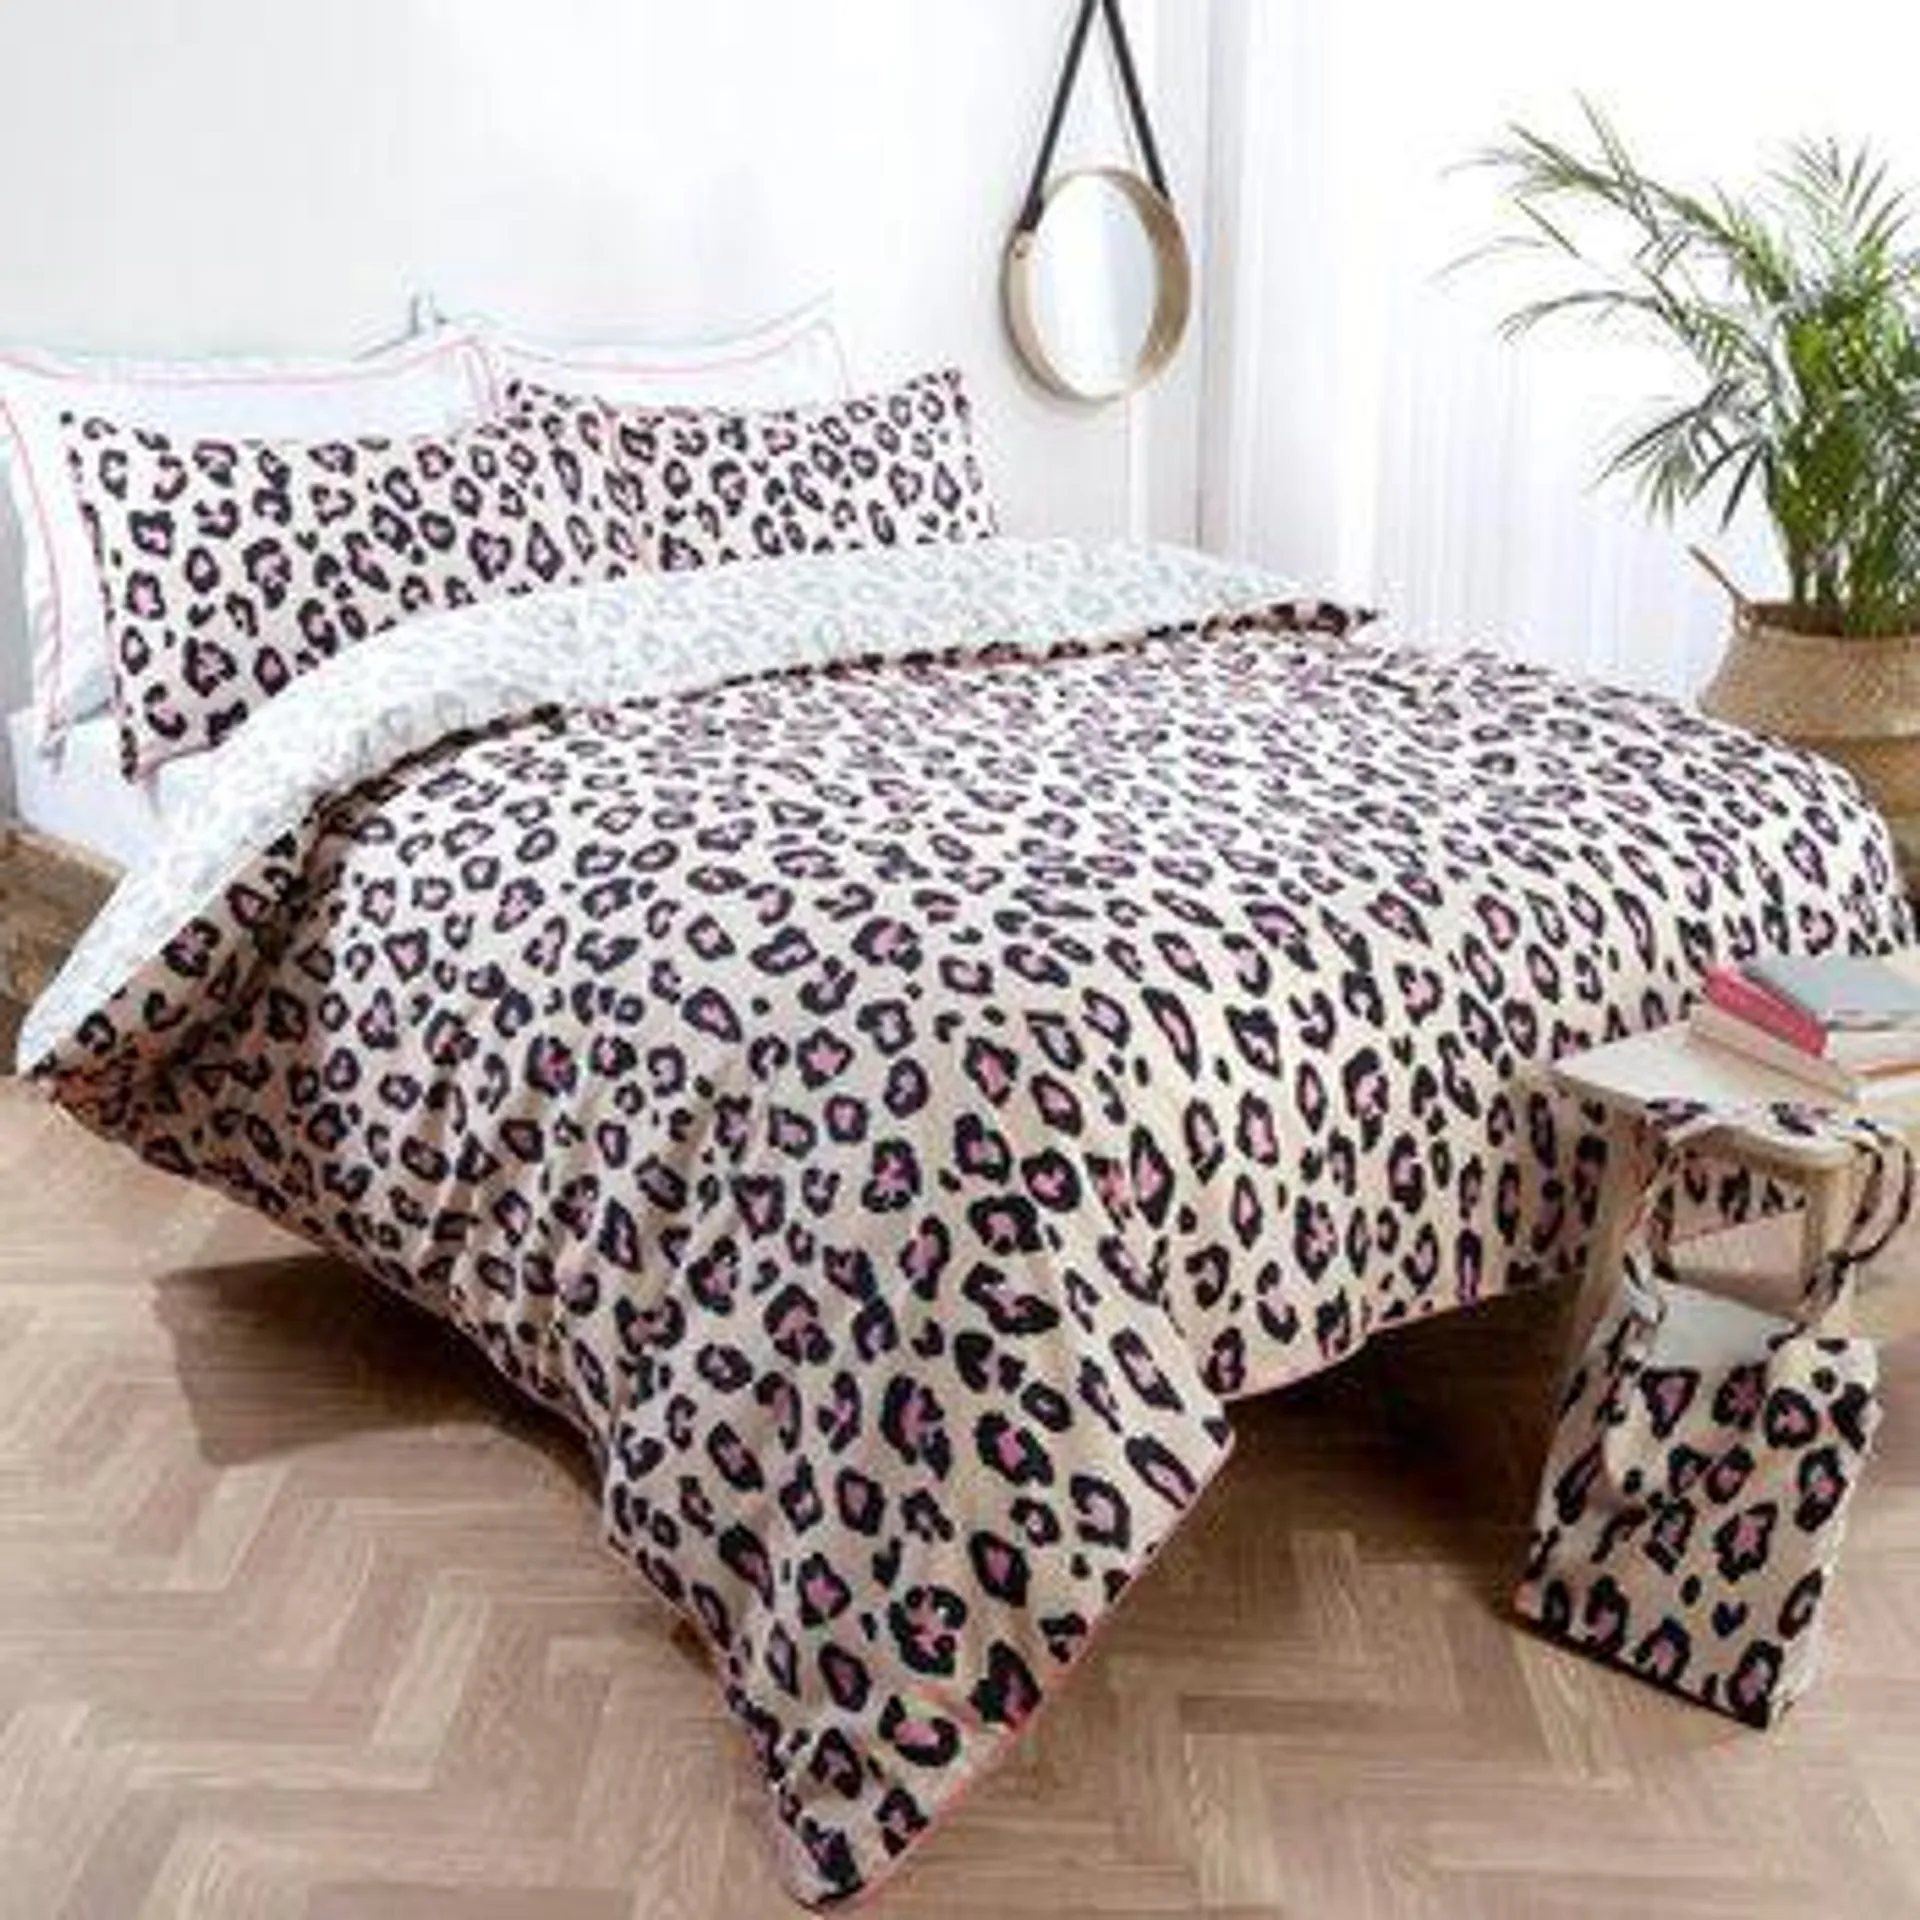 Tabitha Webb Snow Leopard Cotton 3 Piece Bed Set in 4 Sizes